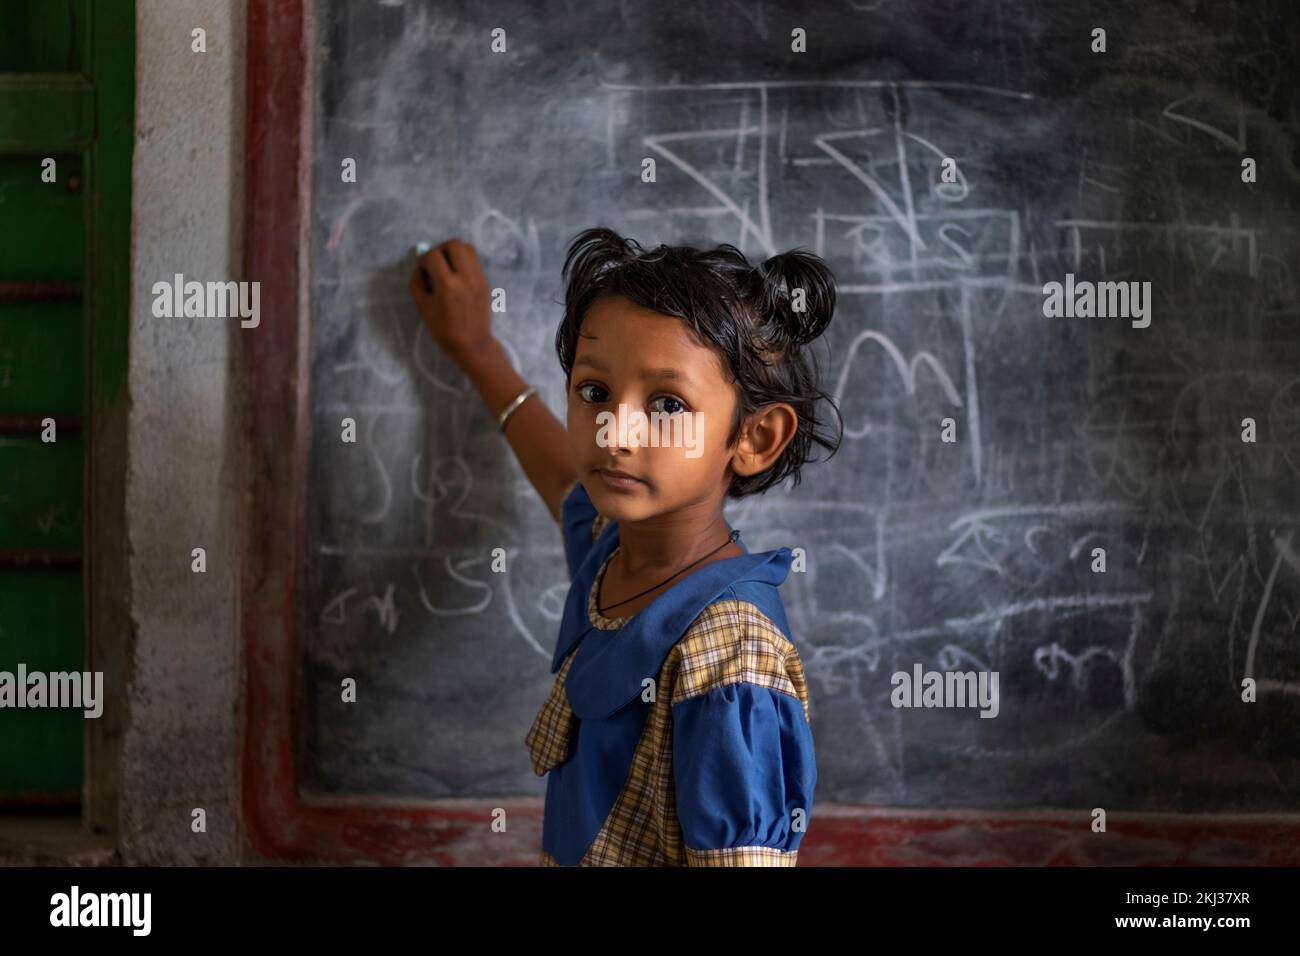 School girl writing on blackboard at school Stock Photo